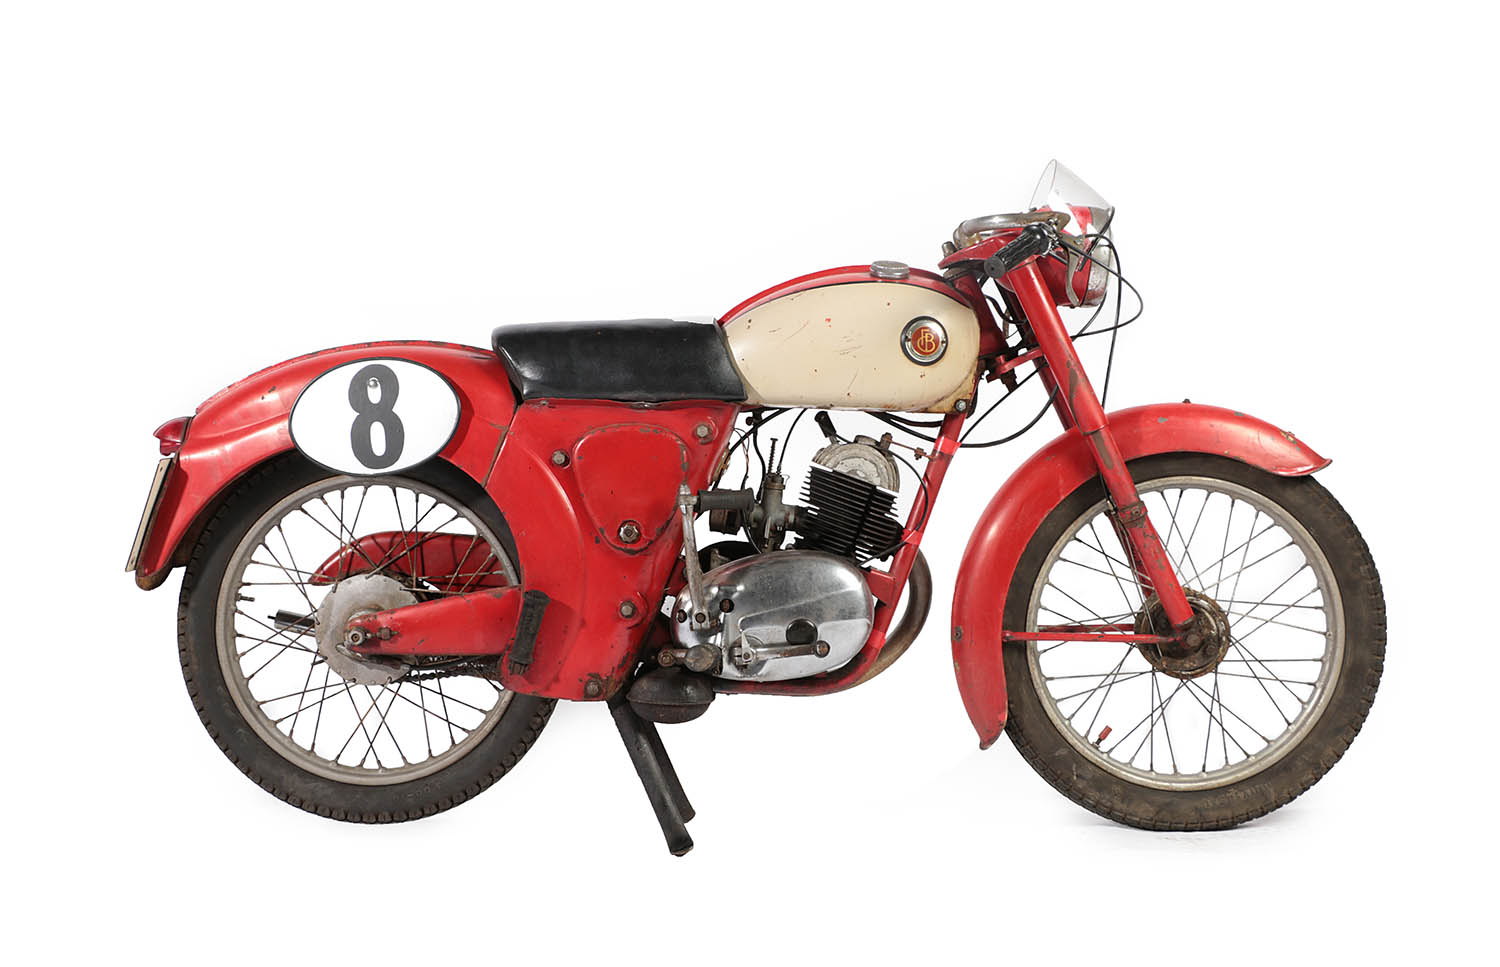 Lot 203 - 1960 Francis Barnett Motorcycle Registration number: 791 UYN Date of first registration: 01 03 1960